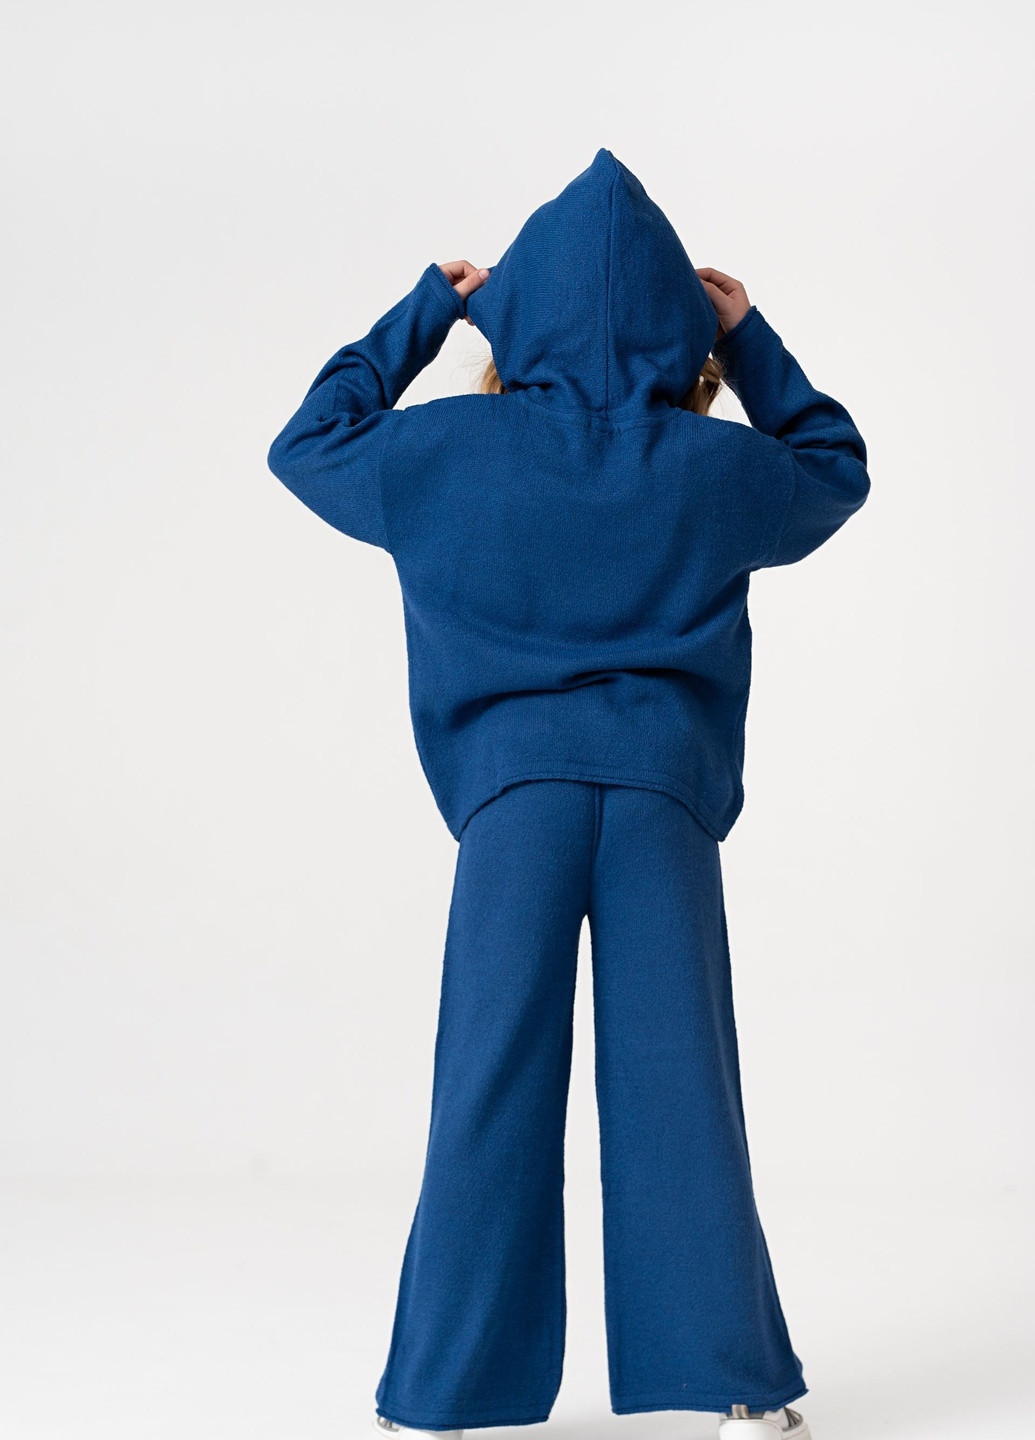 Синий демисезонный костюм синий с капюшоном, вязаный трикотаж брючный Yumster